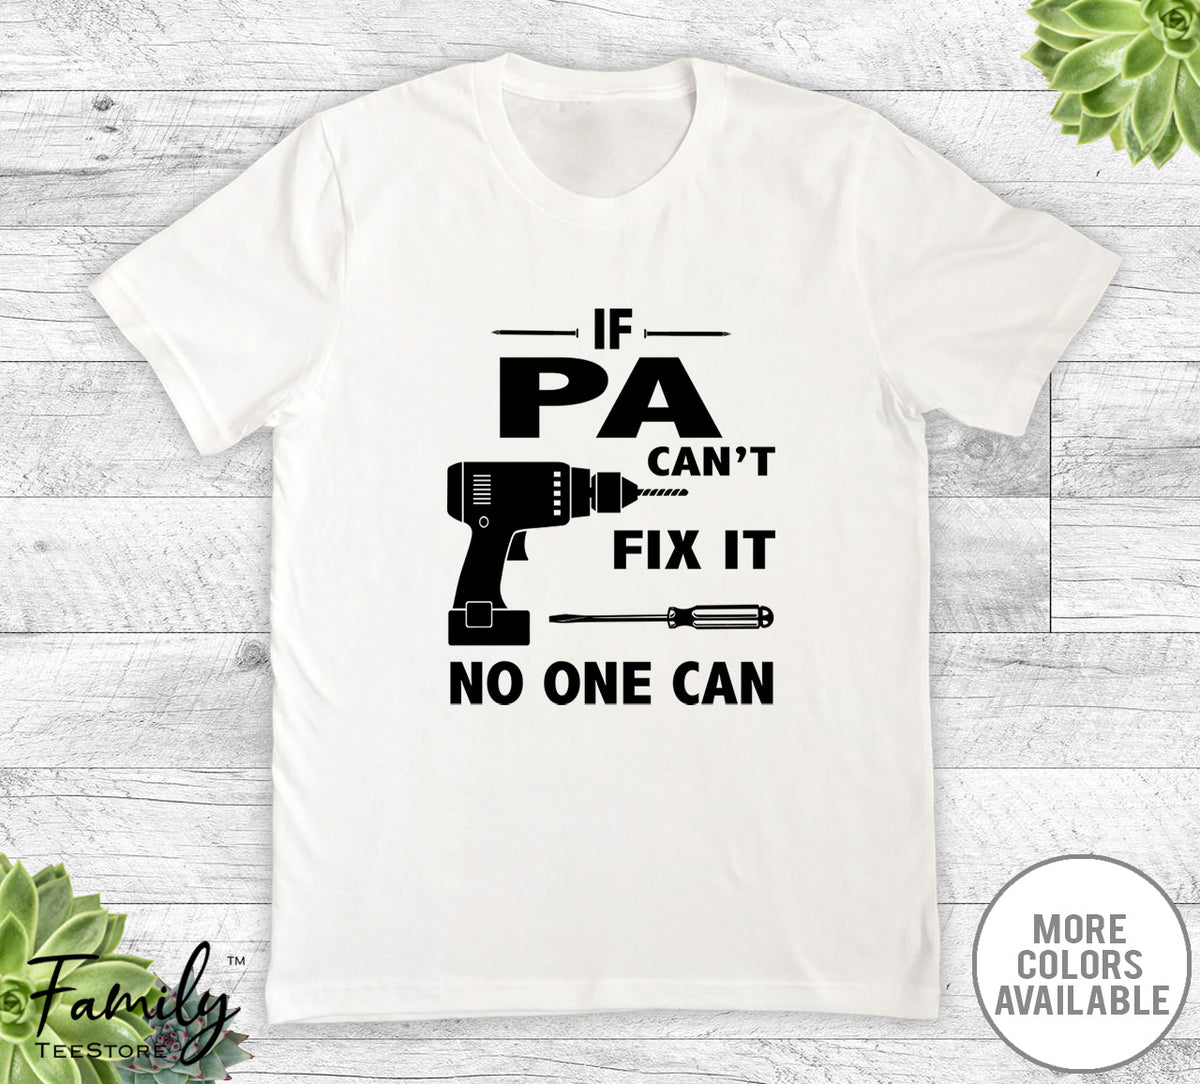 If Pa Can't Fix It No One Can - Unisex T-shirt - Pa Shirt - Pa Gift